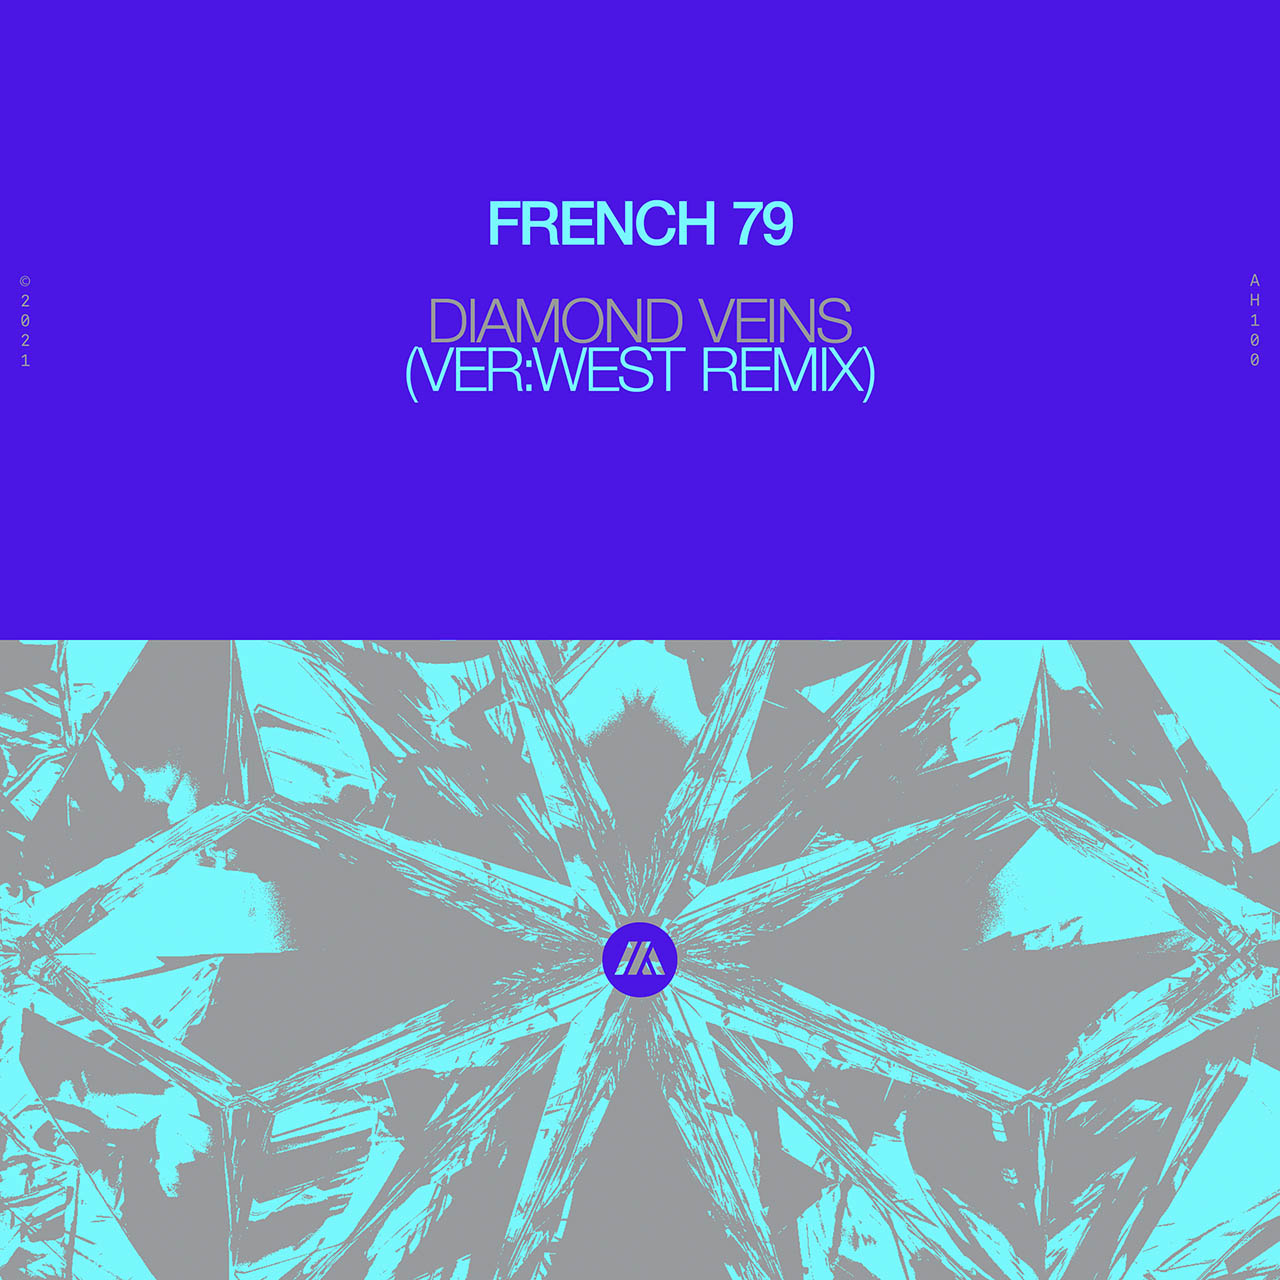 French remix. French 79. Французская песня ti est Fatu. French 79 by your Side Sarah Rebecca.